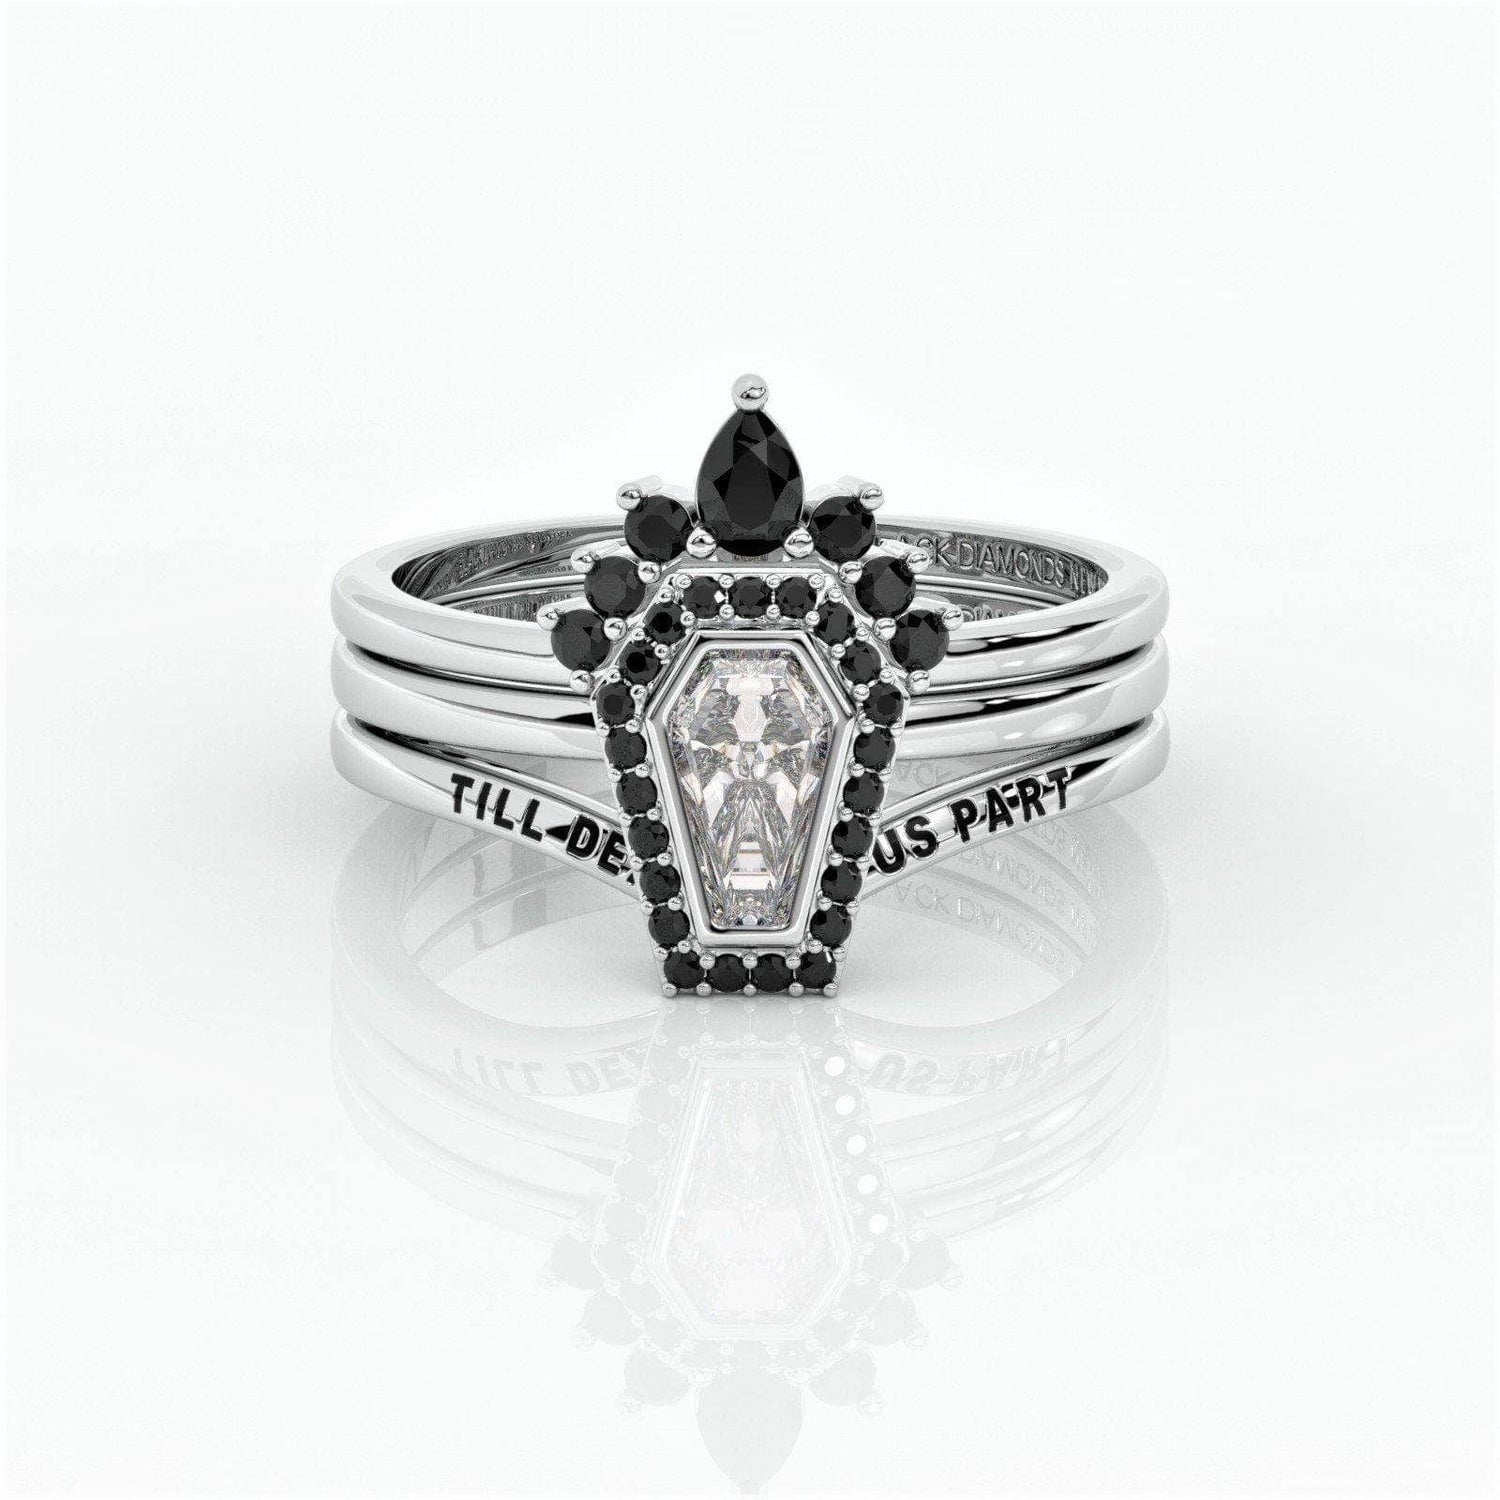 Until Death Rings- Limited Coffin Shape Moissanite Wedding Rings - Black Diamonds New York